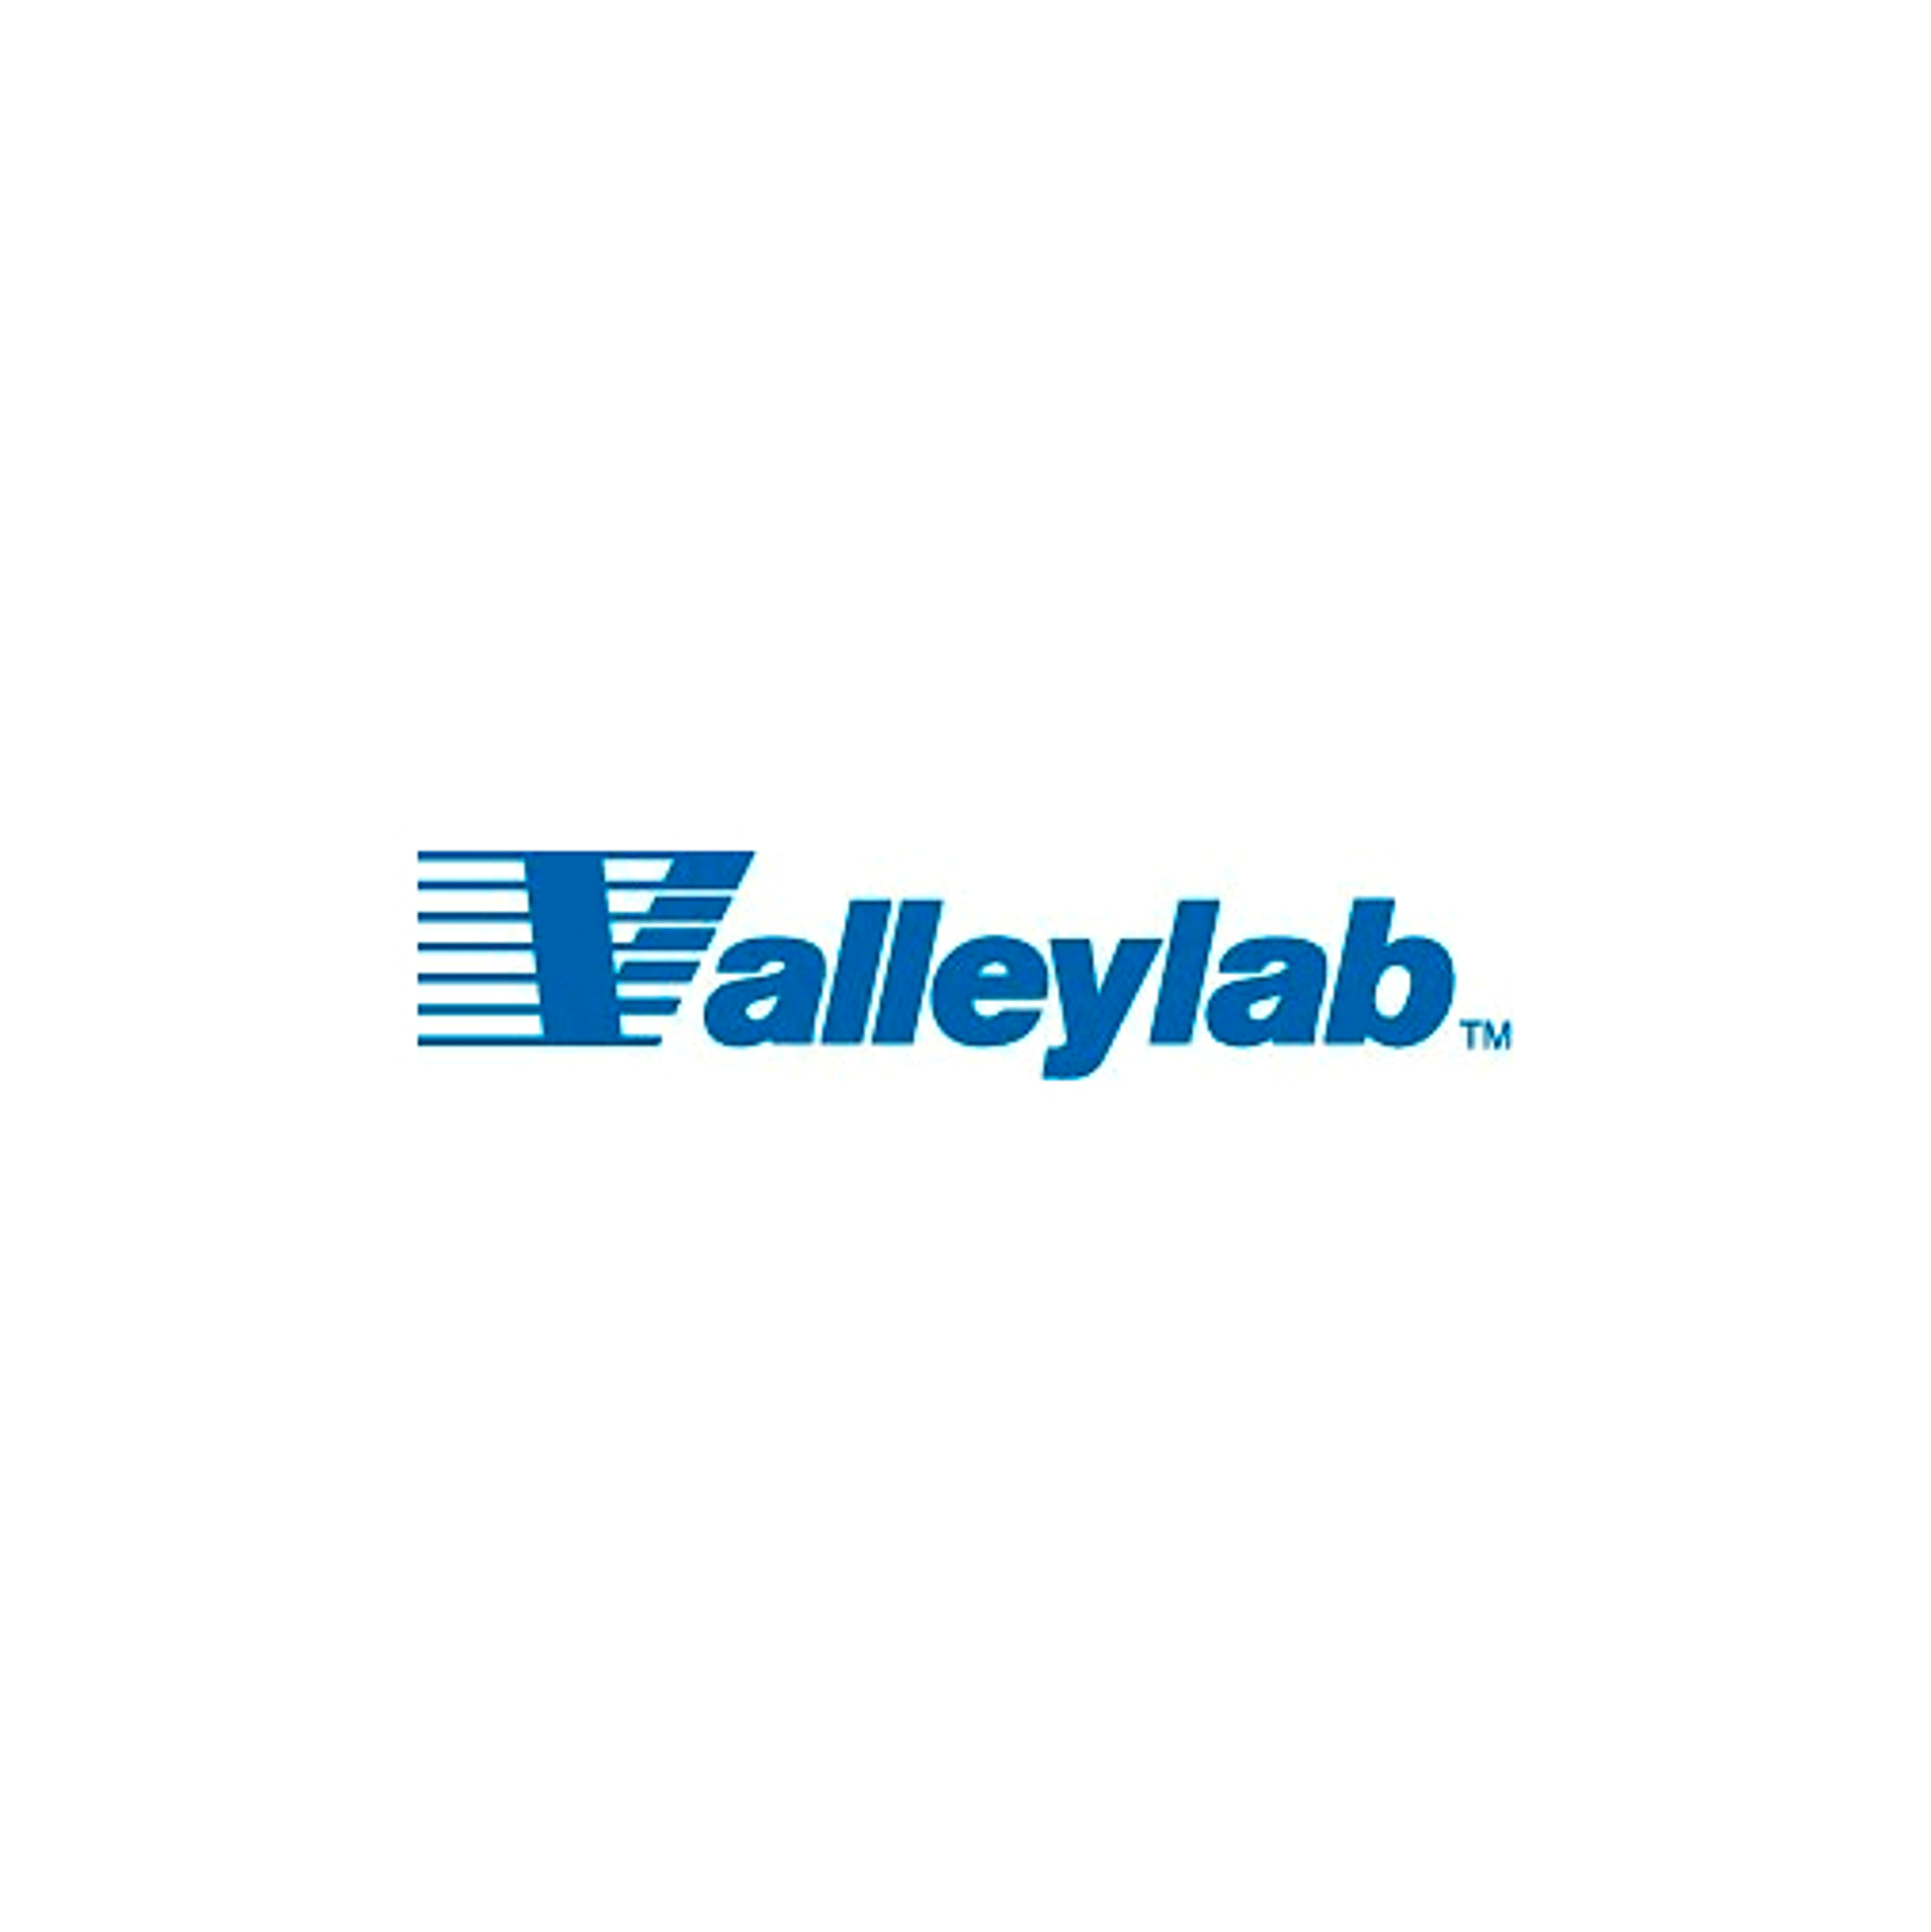 Equiptrack includes Valleylab equipment